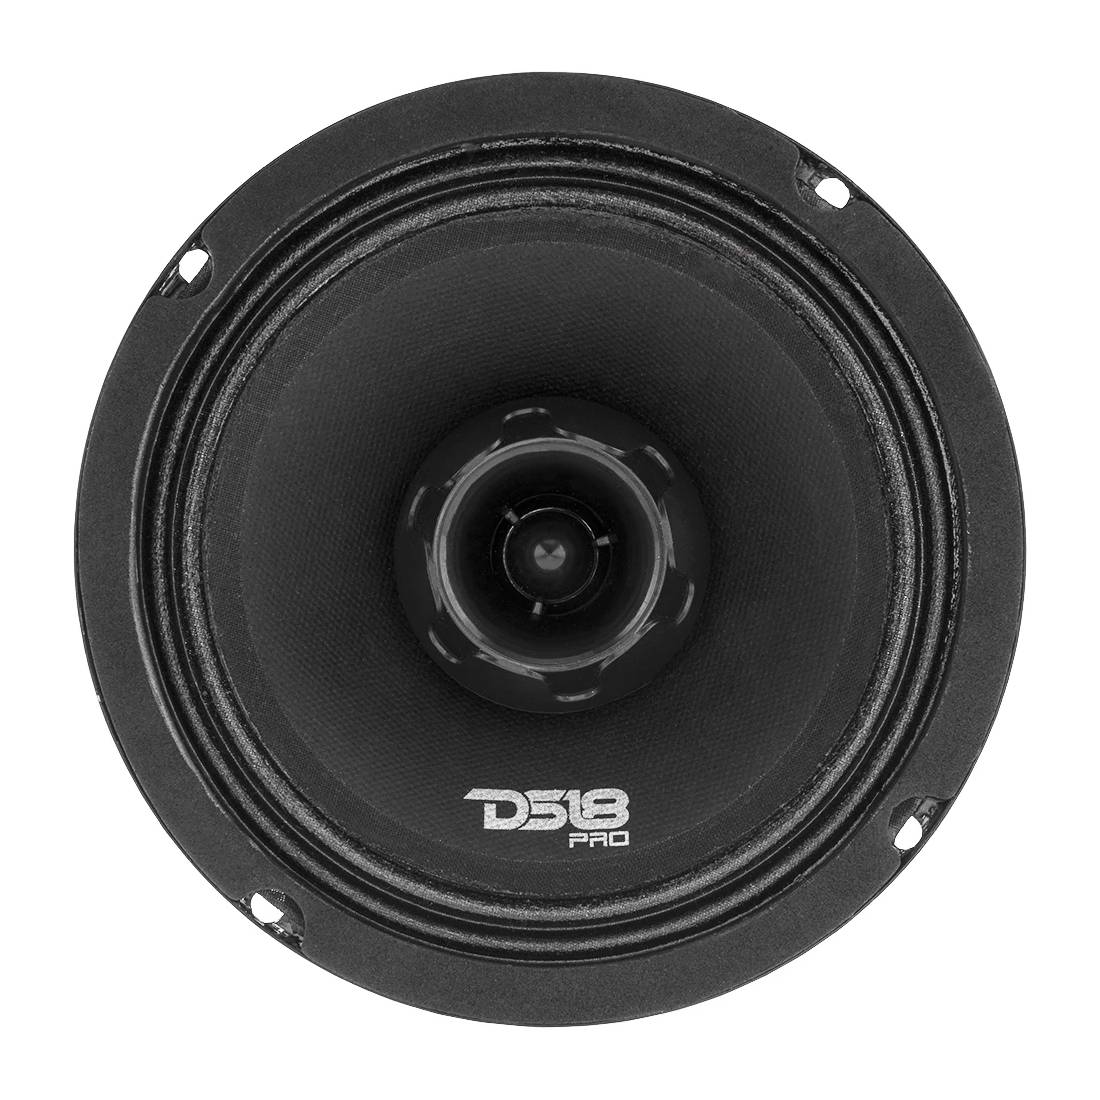 DS18 PRO-ZT6 450 Watts Max Power 4 Ohm 6.5" 2 Way Midrange Stereo Car Audio Speakers